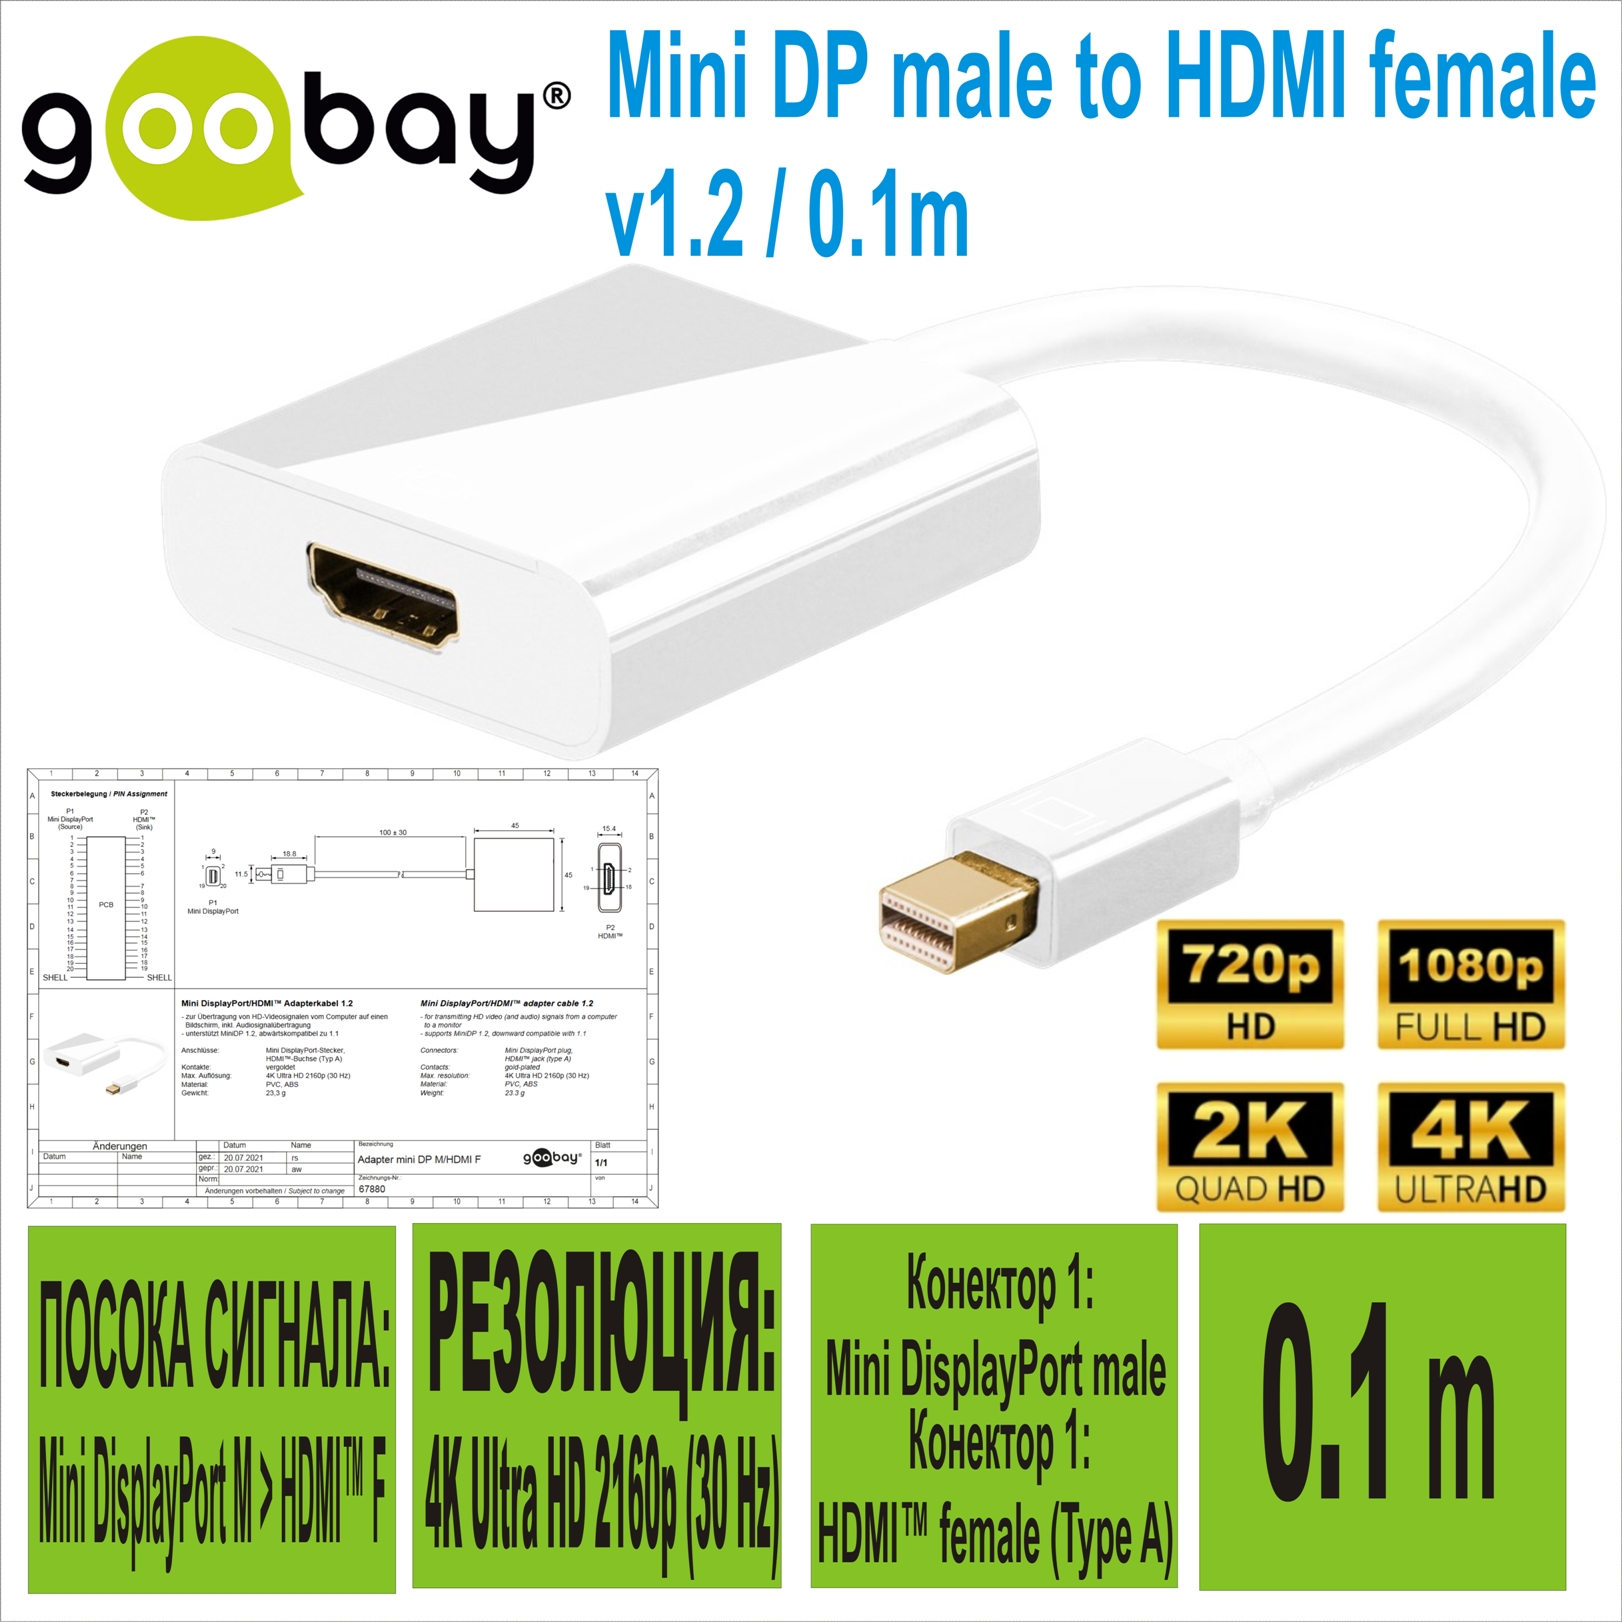 Mini DP male to HDMI female v1.2/0.1m Goobay